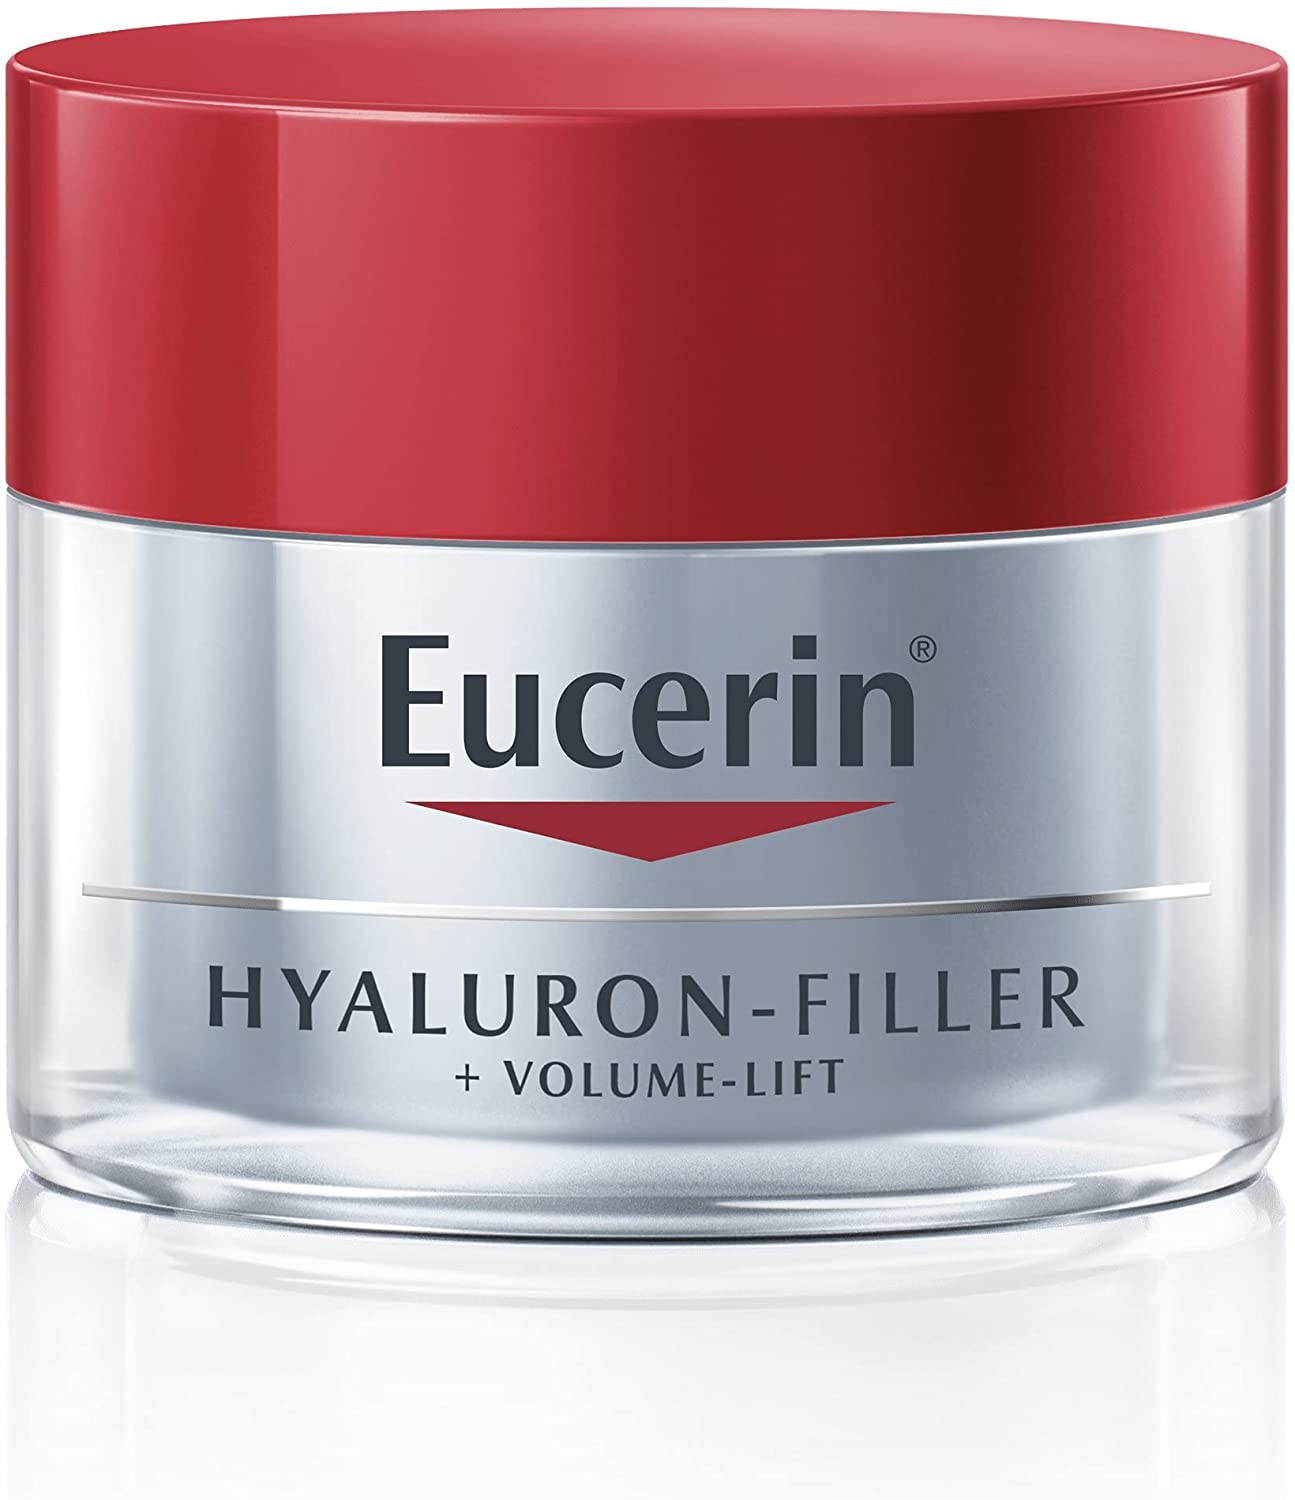 Eucerin Anti-Age Volume-Filler Night Cream 50ml